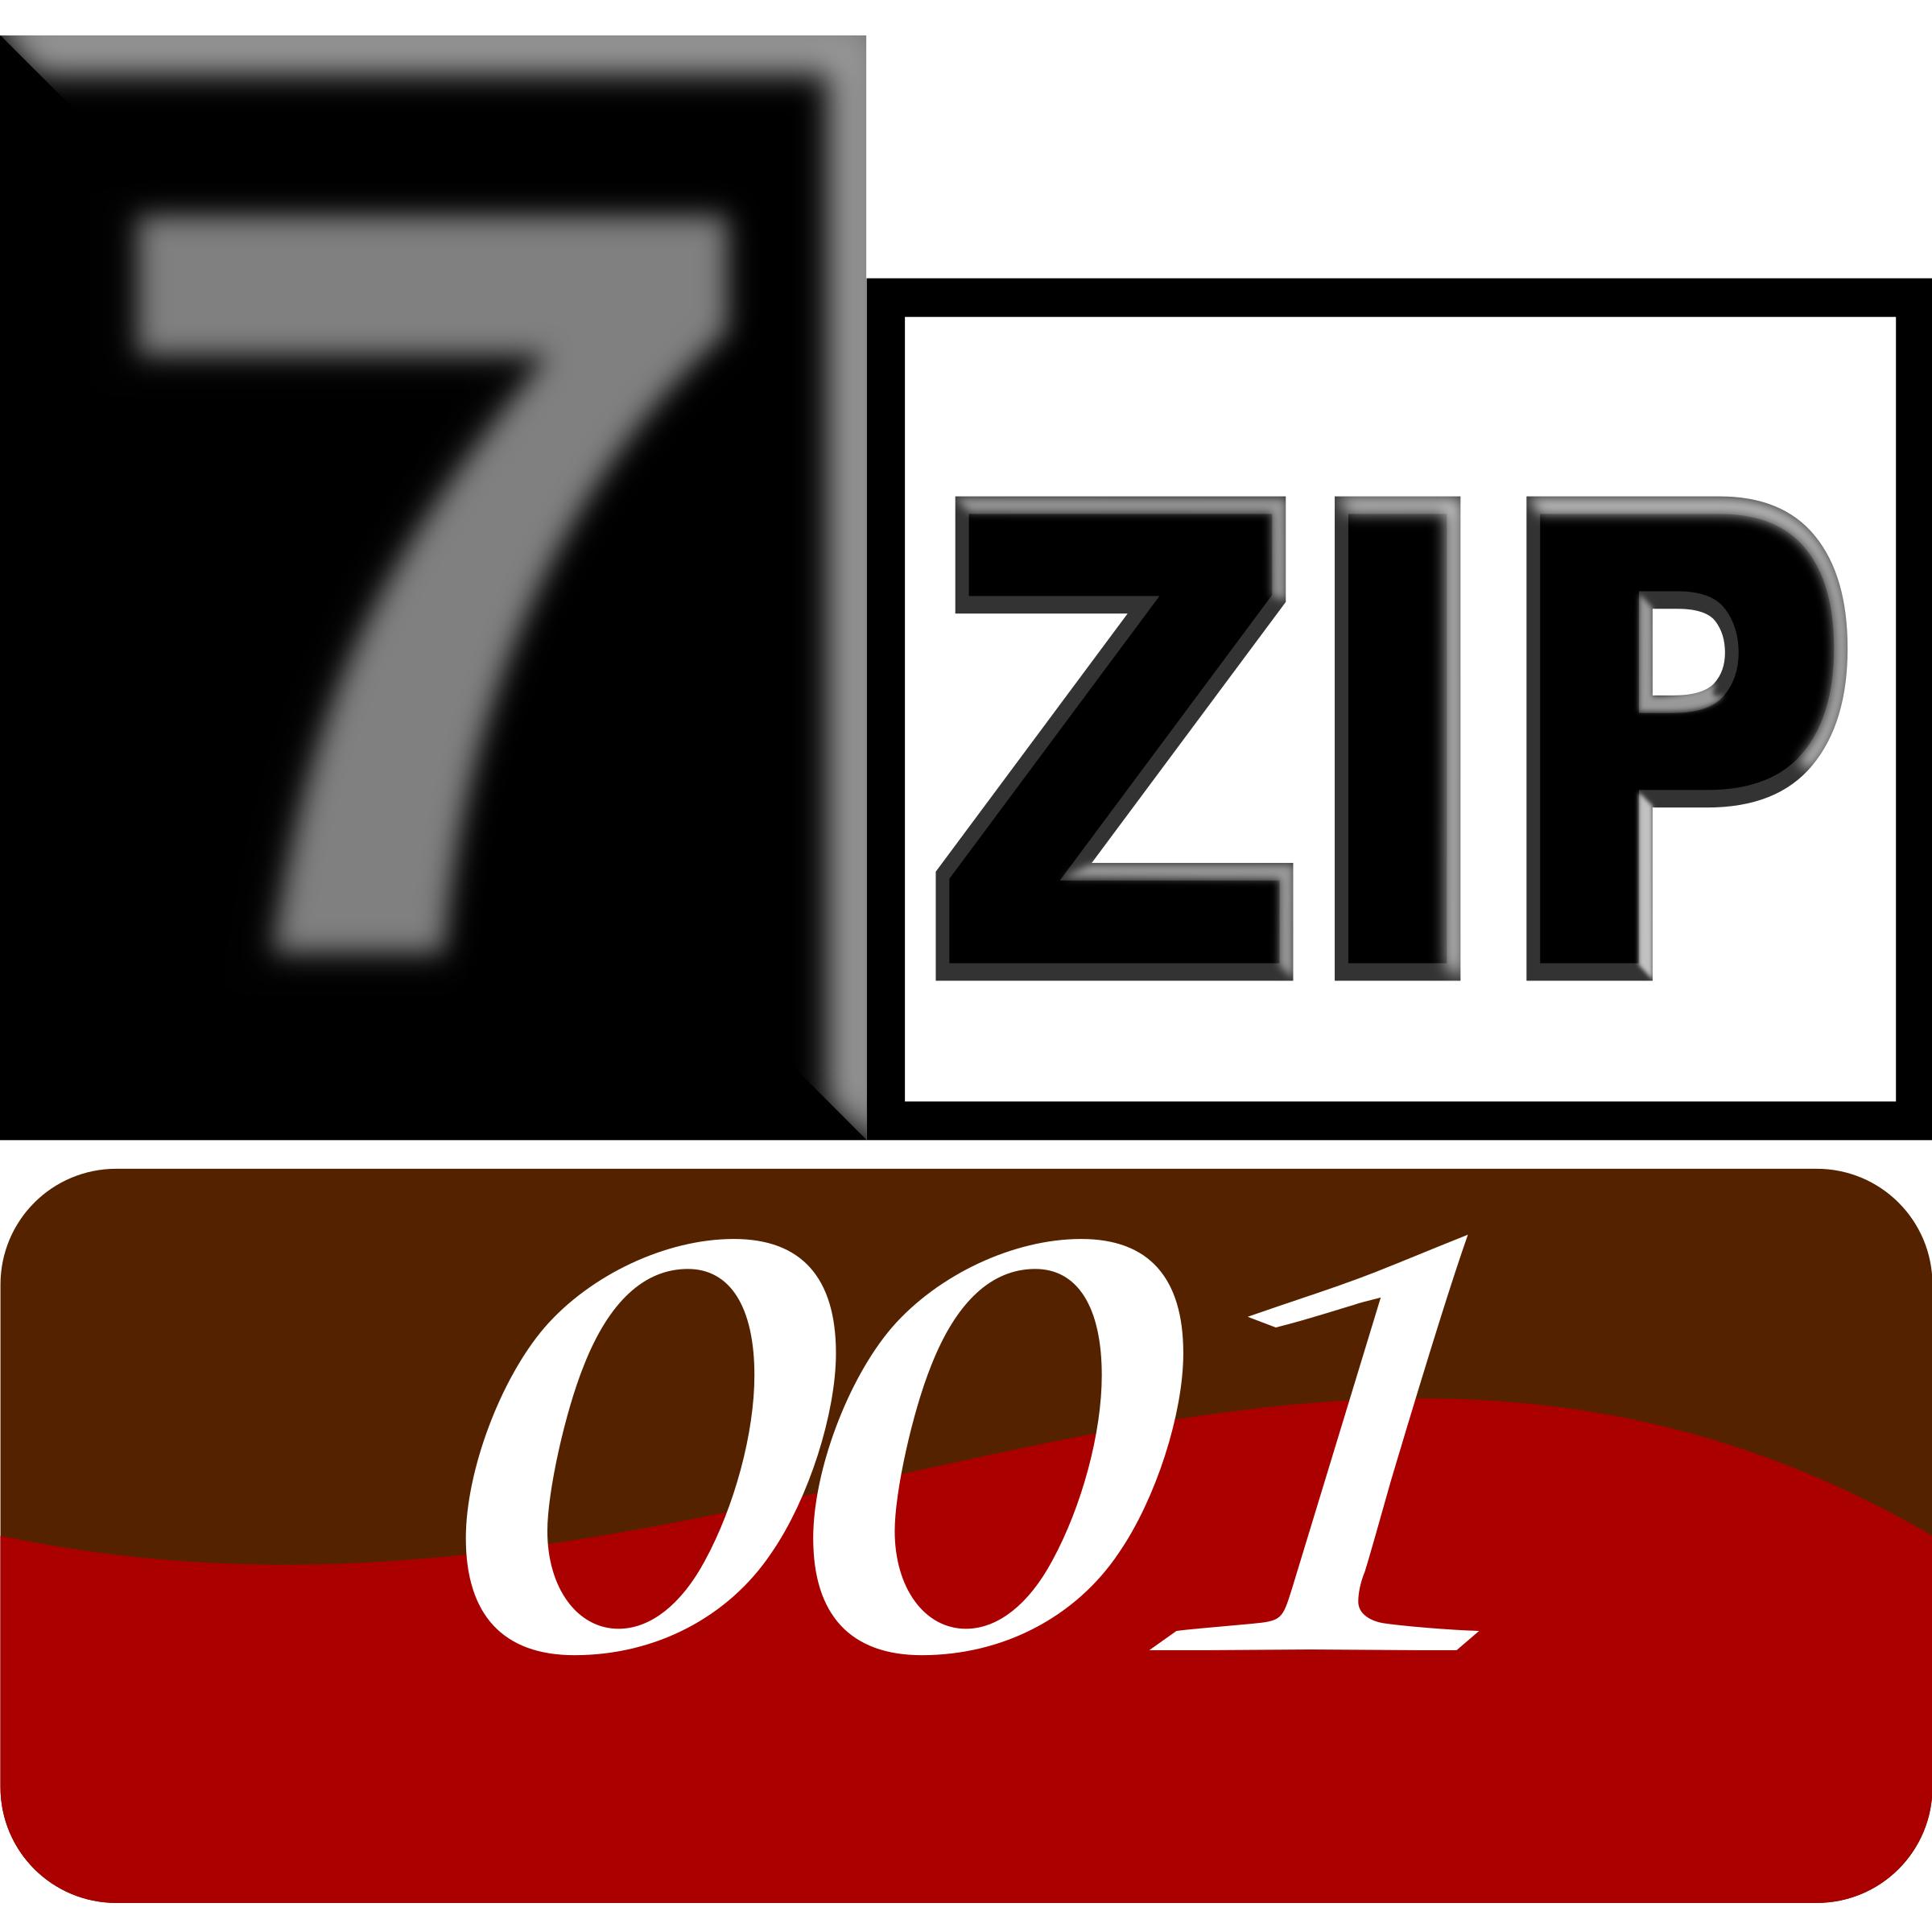 7zipClassic-001 png